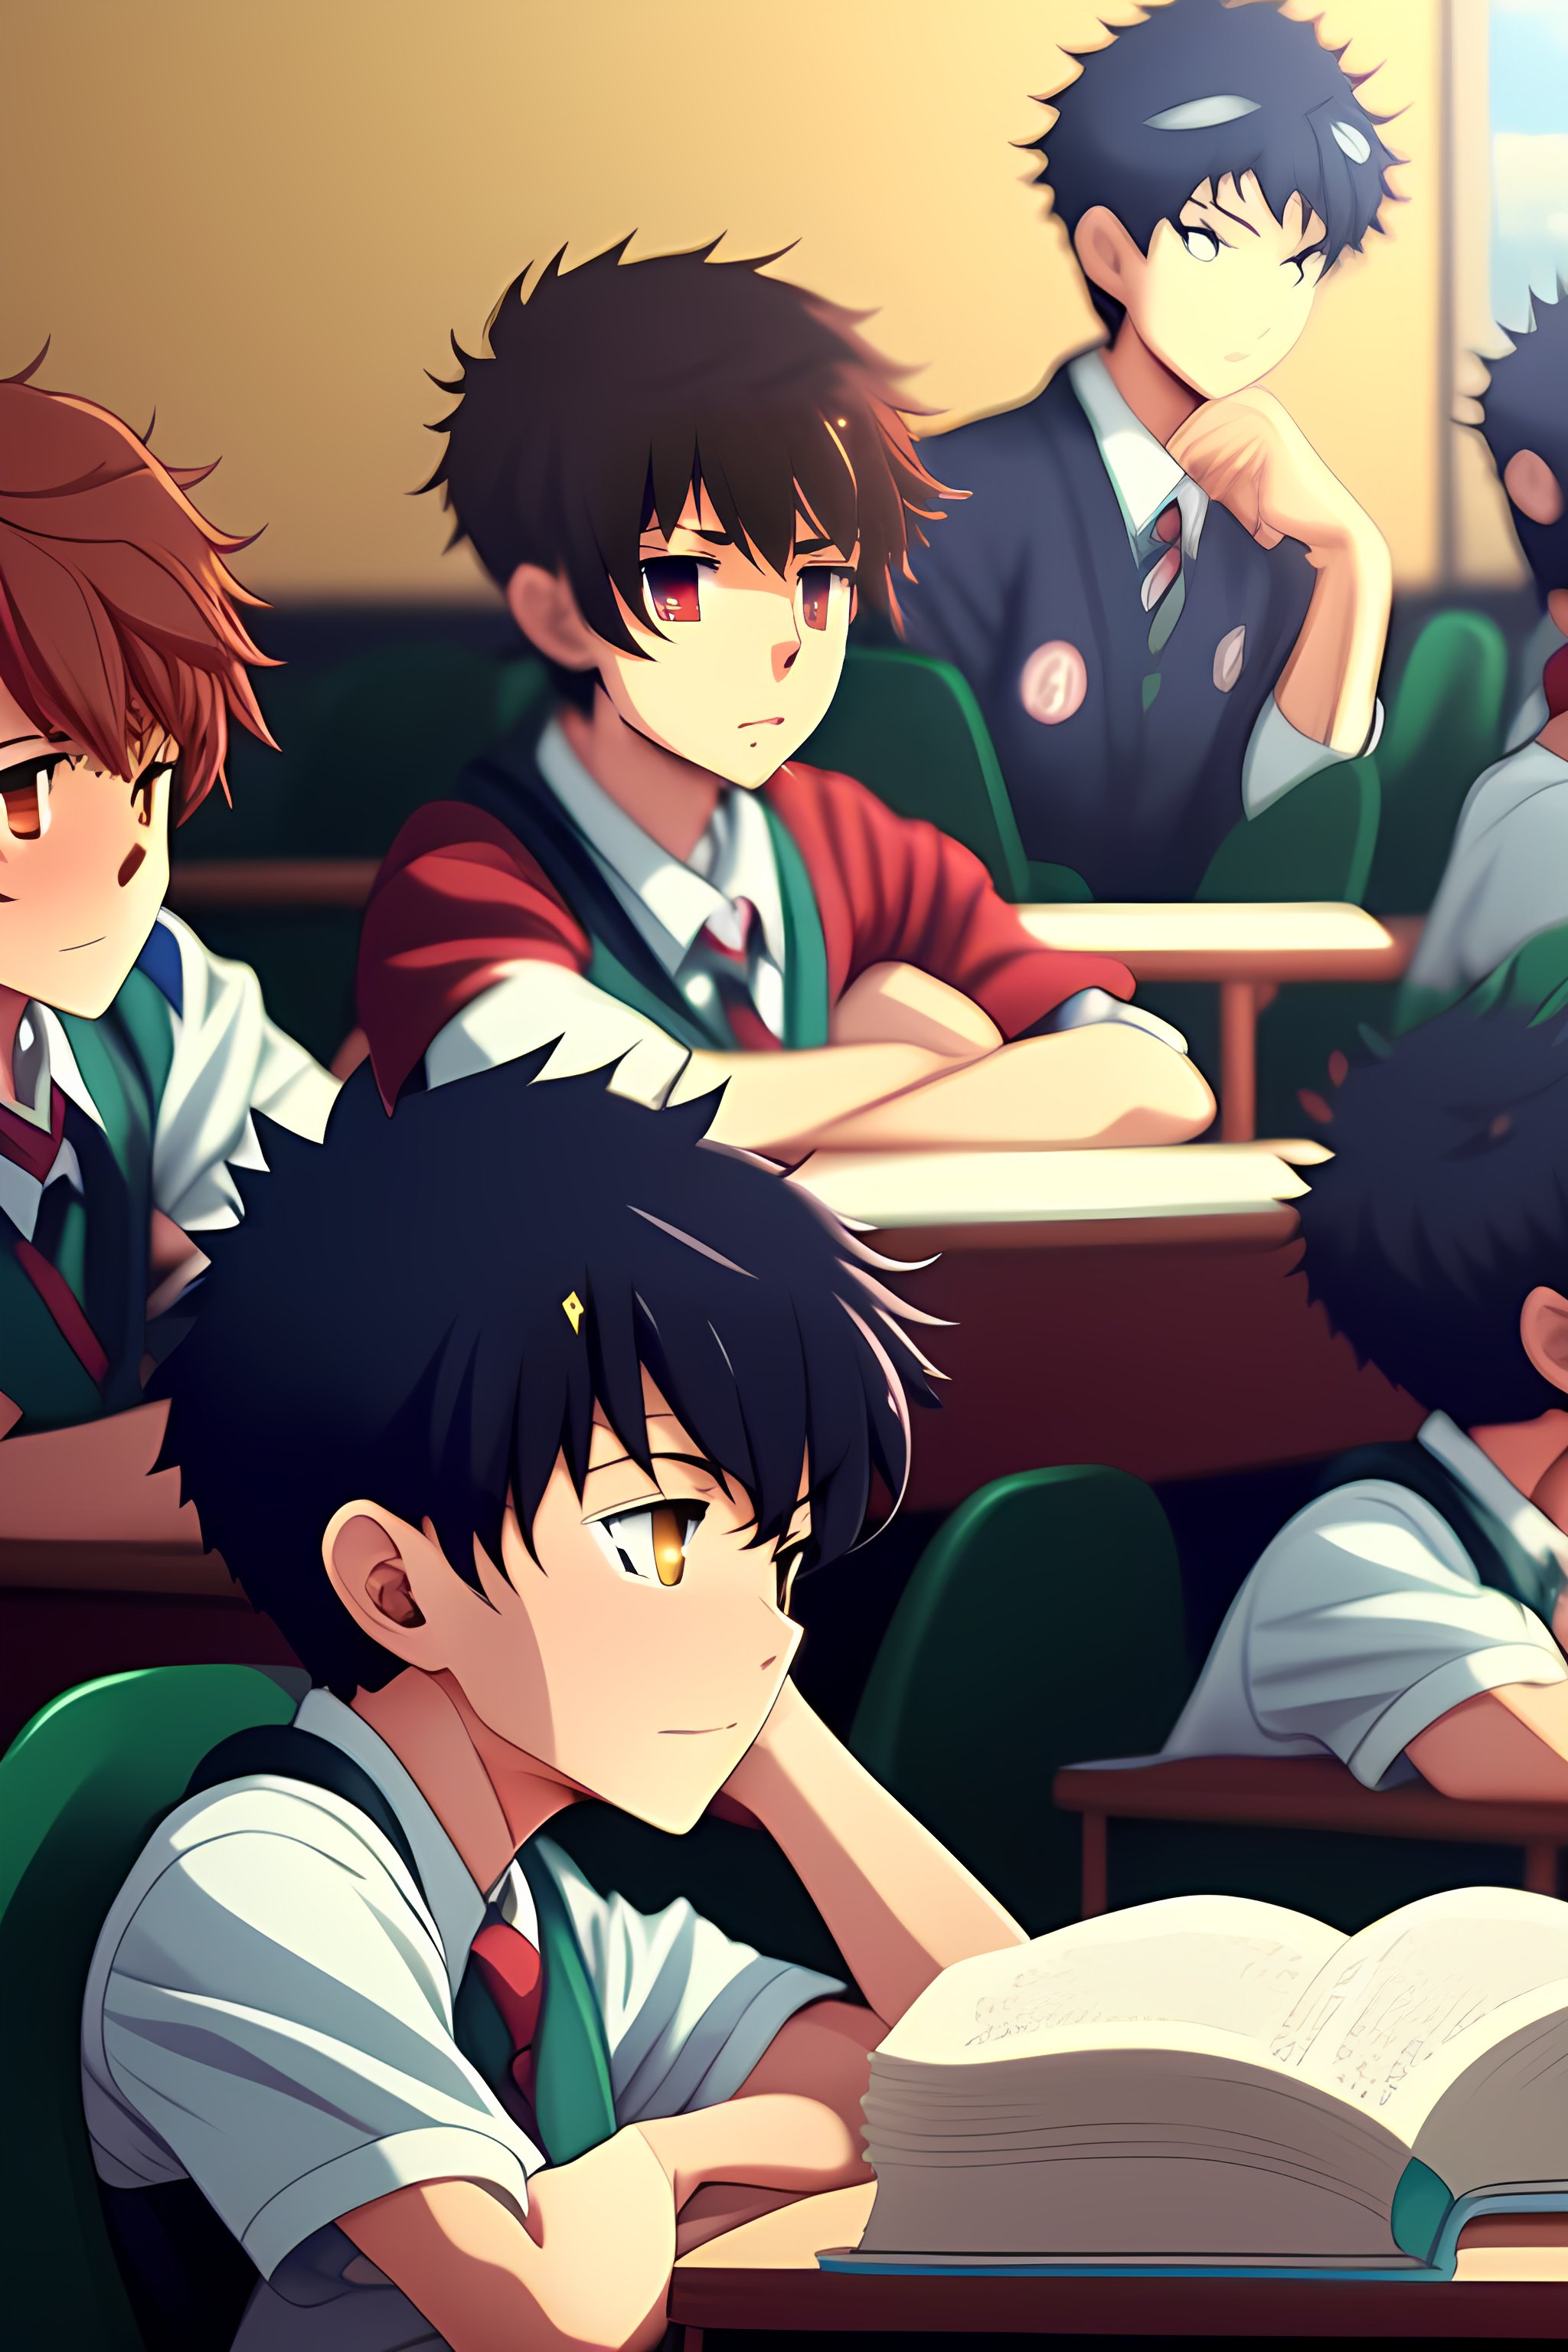 Lexica - A boy who sleeps in the classroom, a senior high school student,  with a anime style